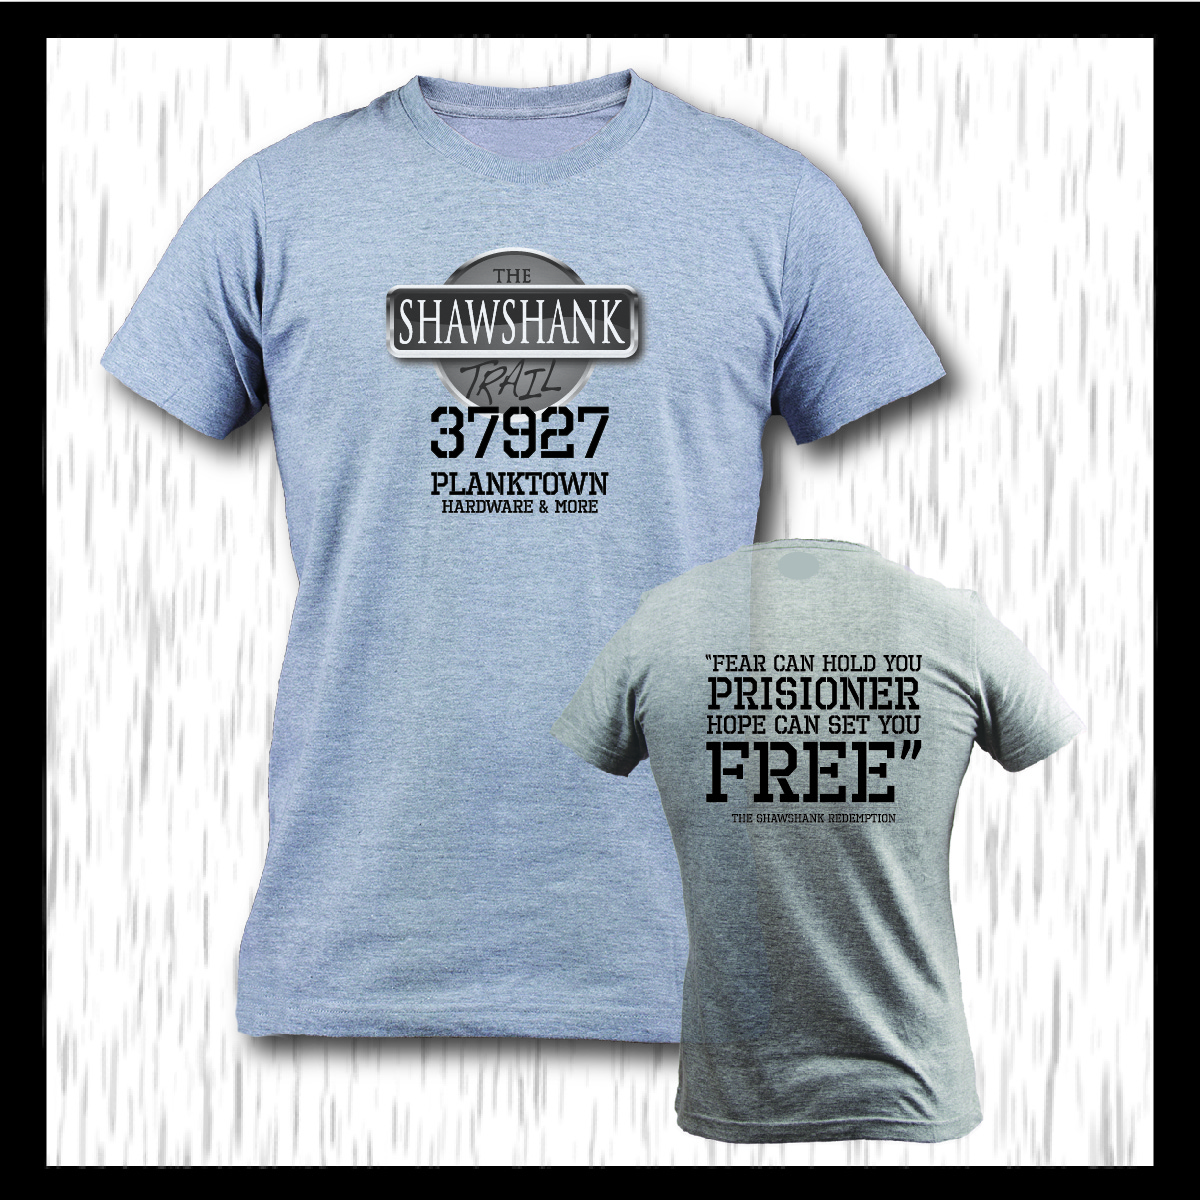 Shawshank Trail T-Shirt - Number